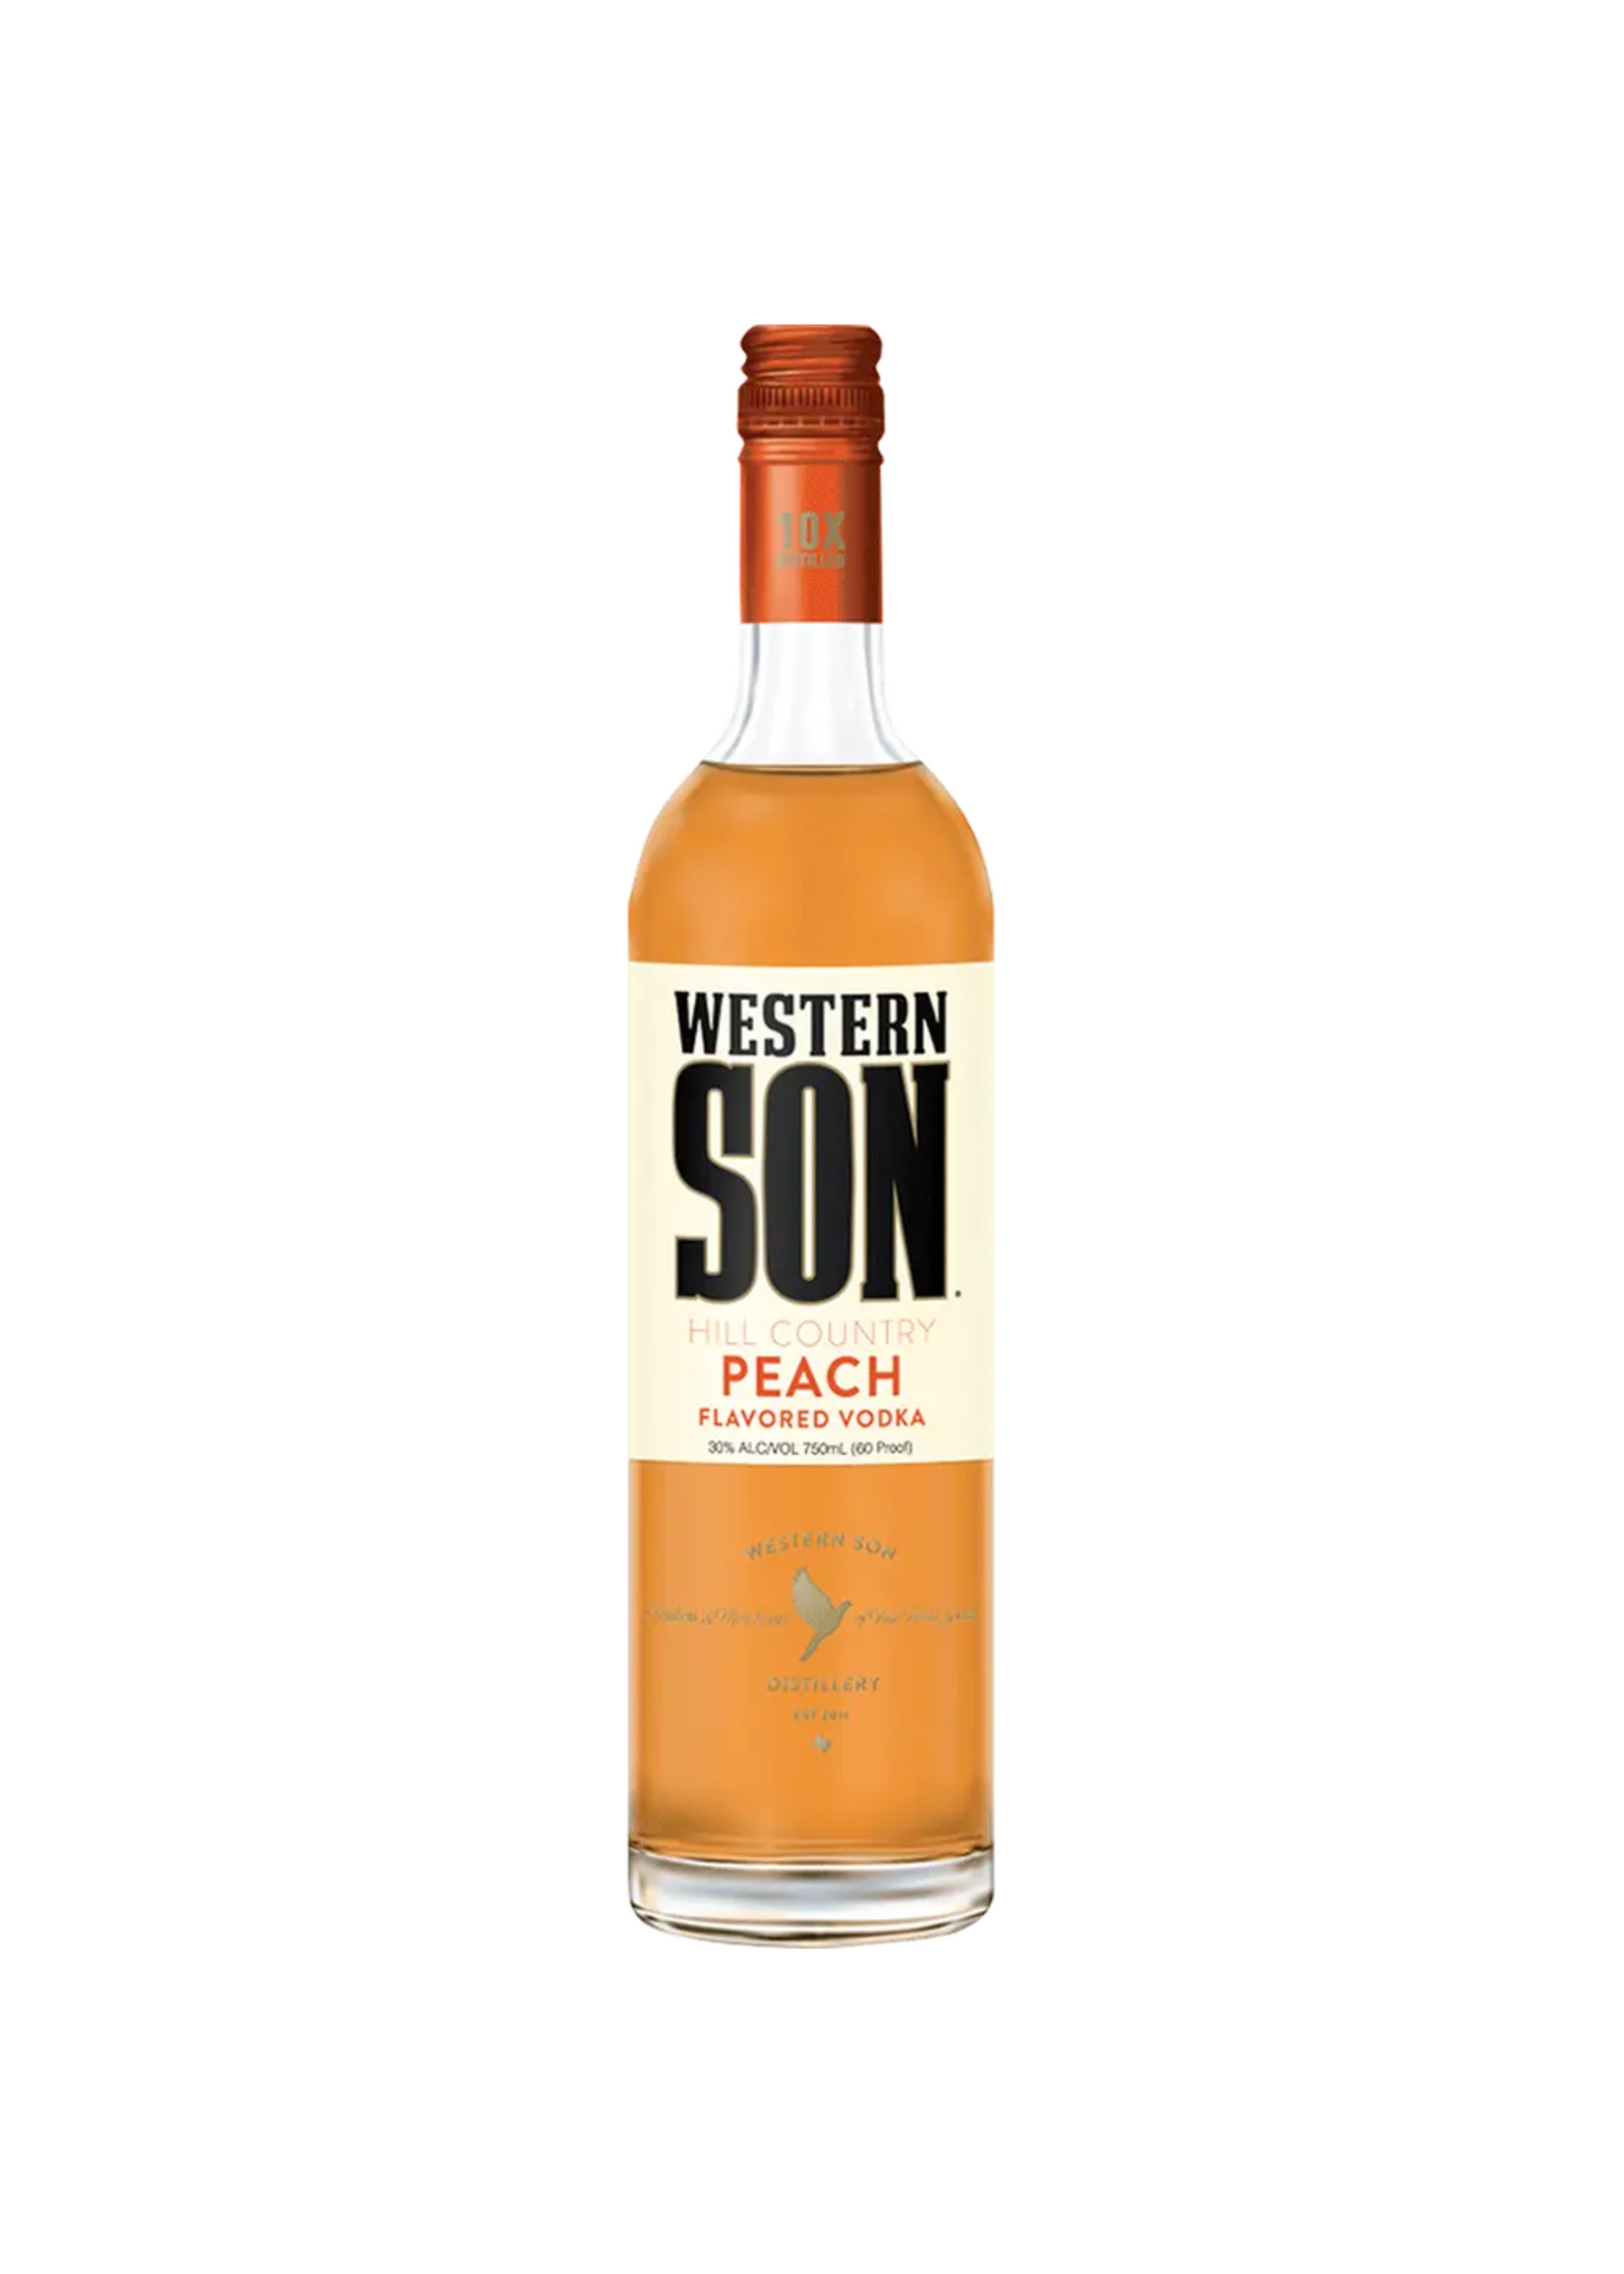 Western Son Western Son Peach Flavored Vodka 60Proof 750ml